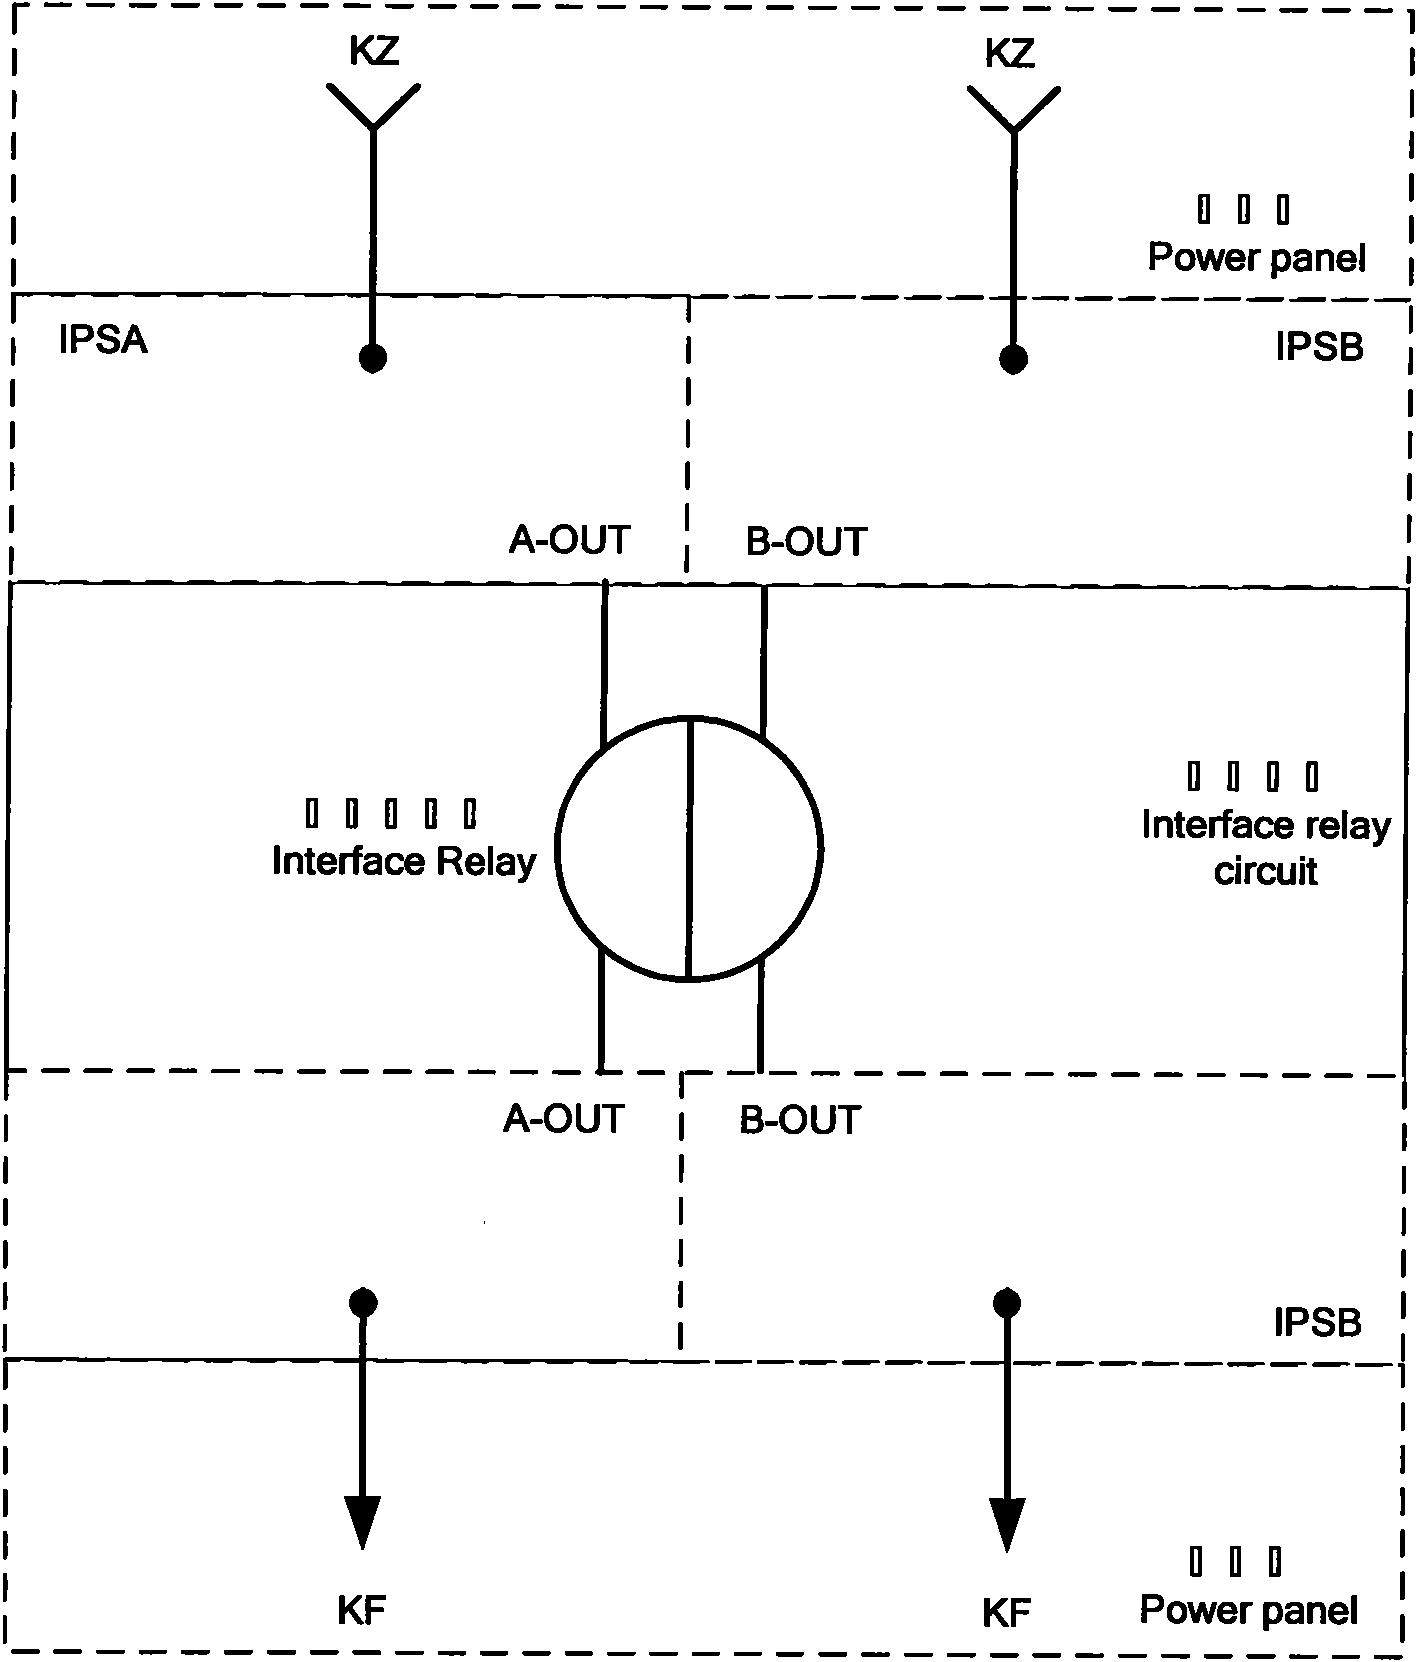 Computer interlocking system code bit-level redundancy method